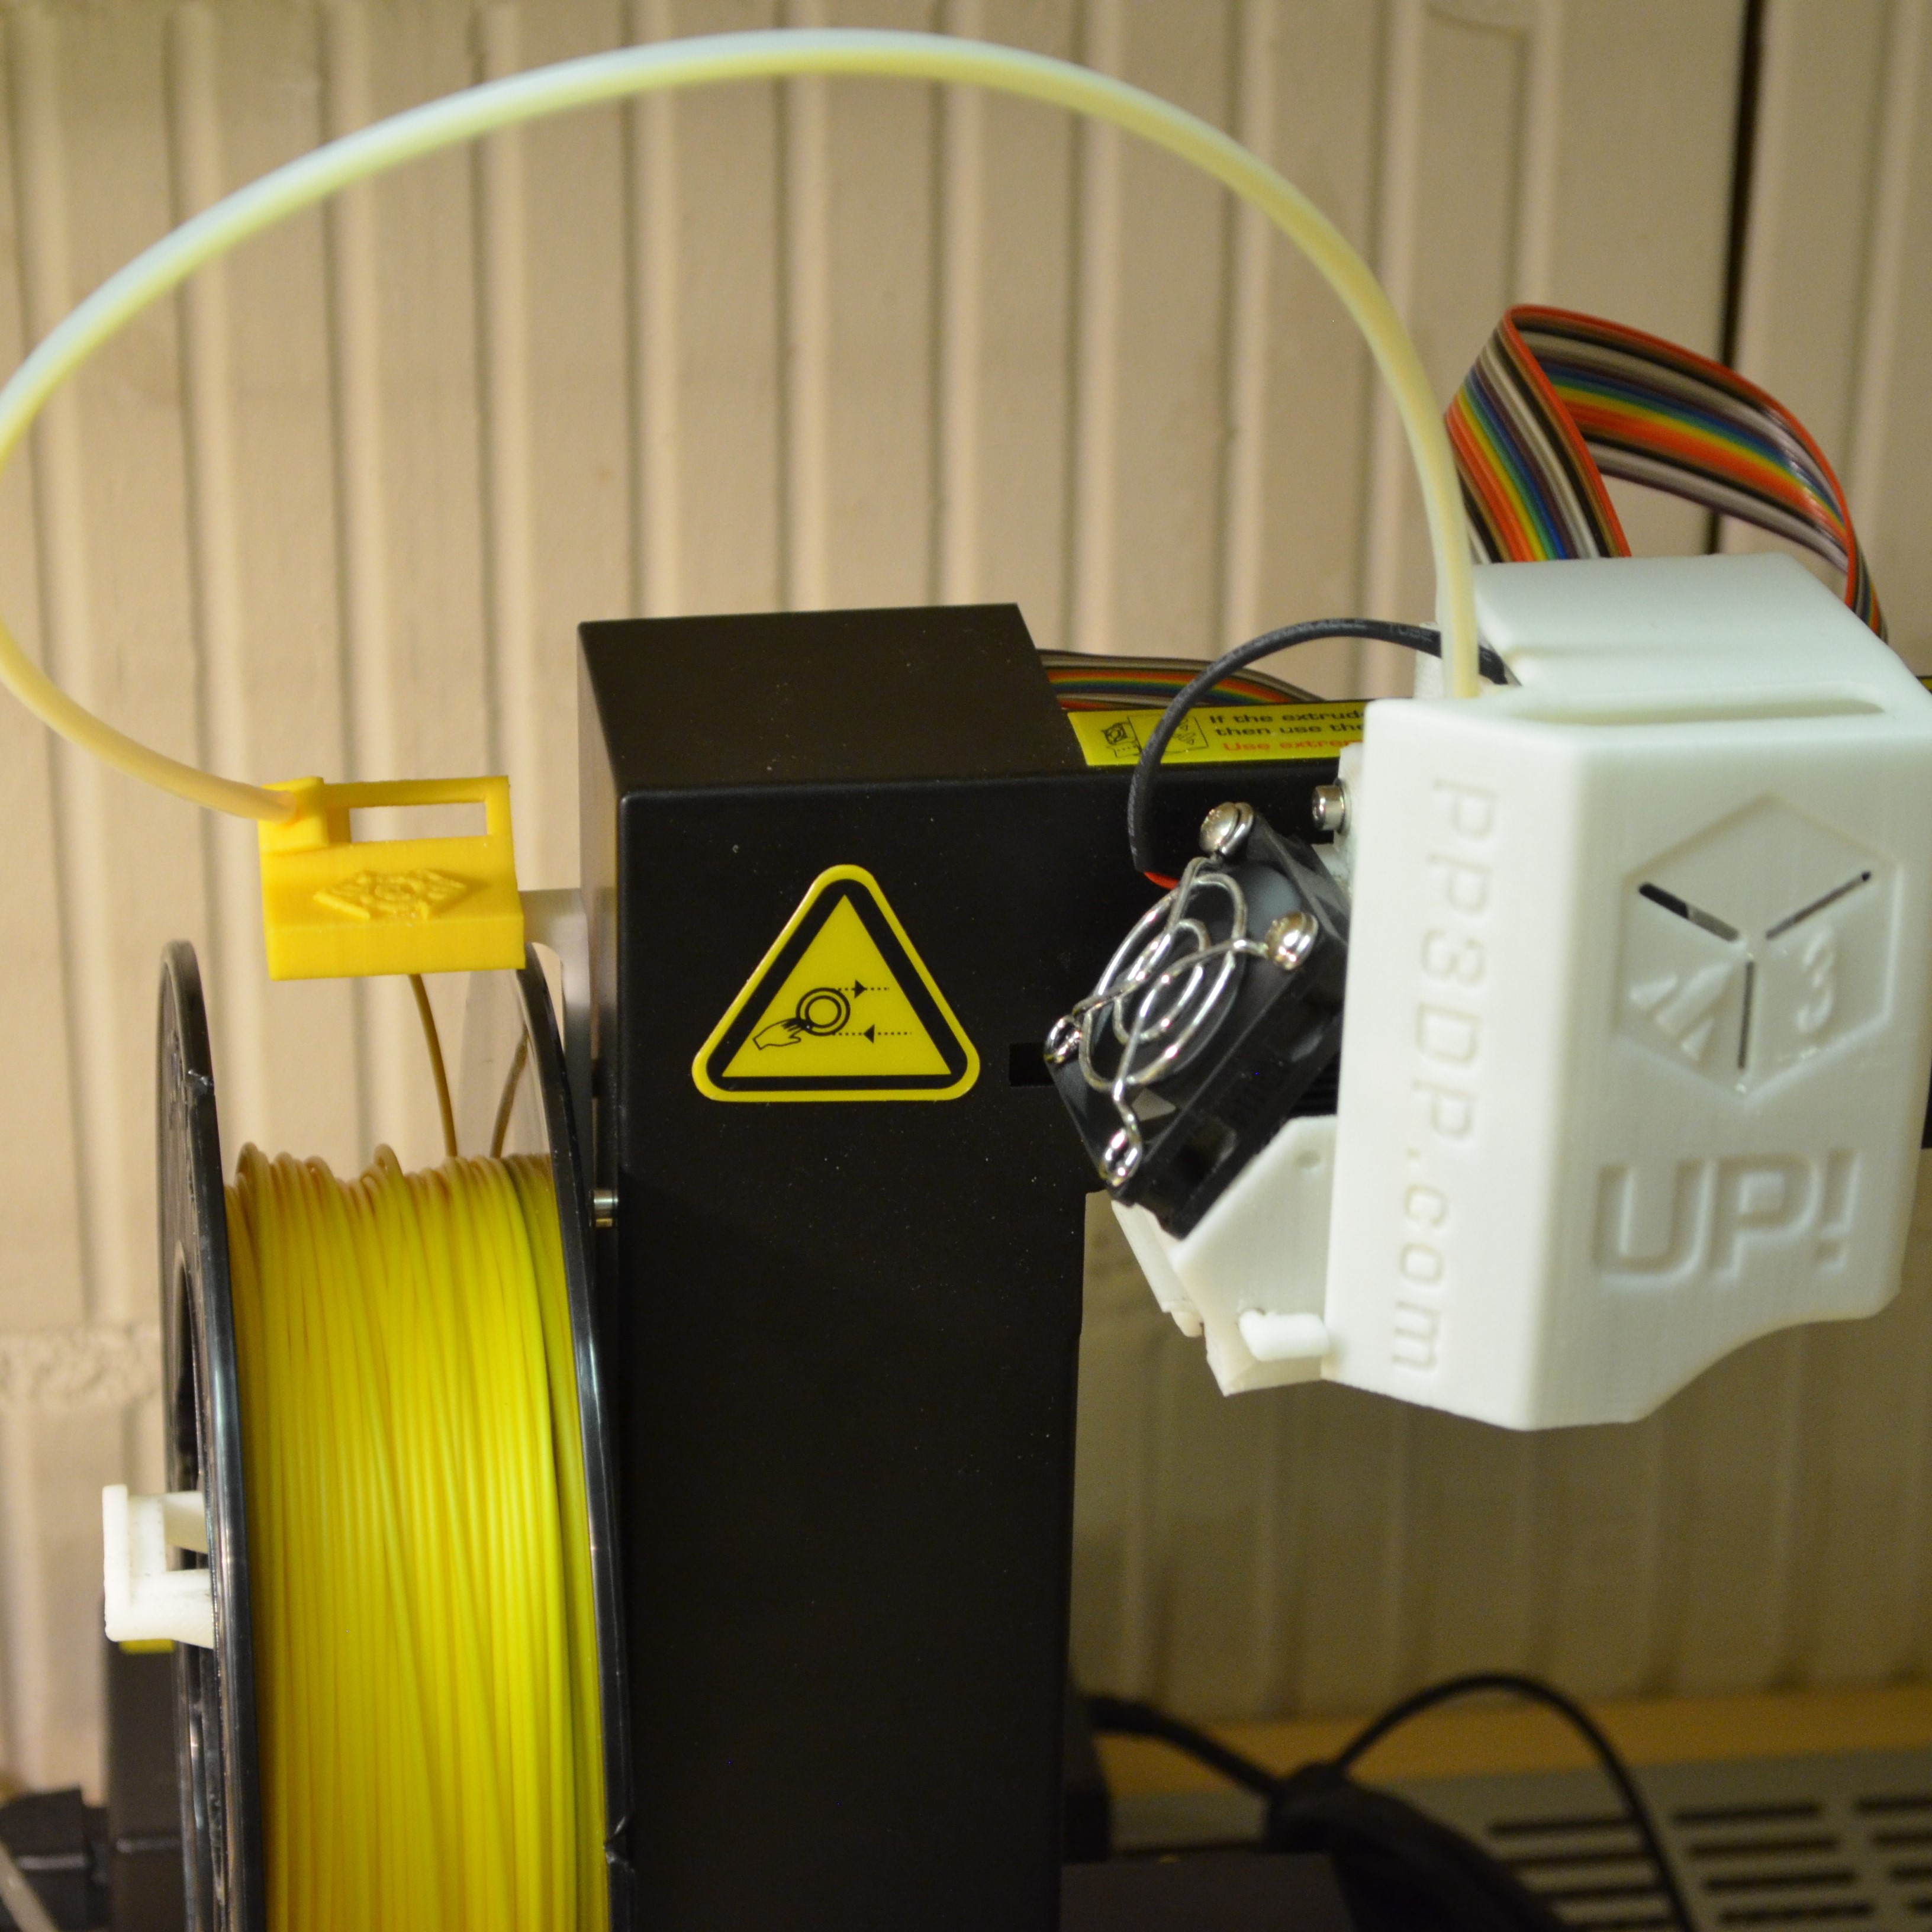 UP Plus 2 3D Printer - Filament Guide